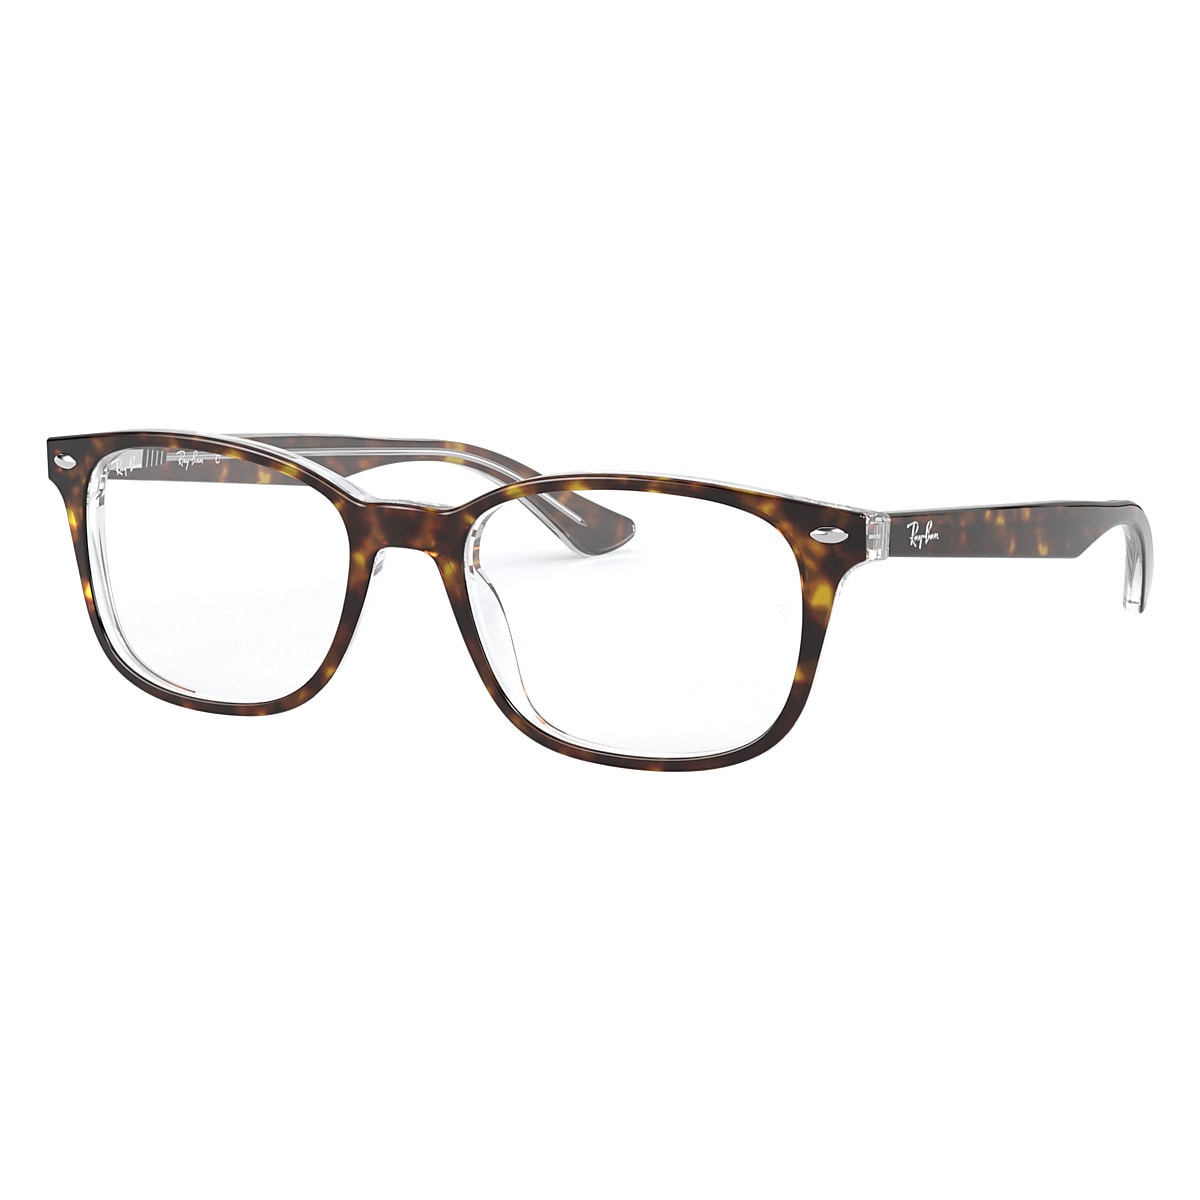 RB5375 OPTICS Eyeglasses with Havana On Transparent Frame - RB5375 